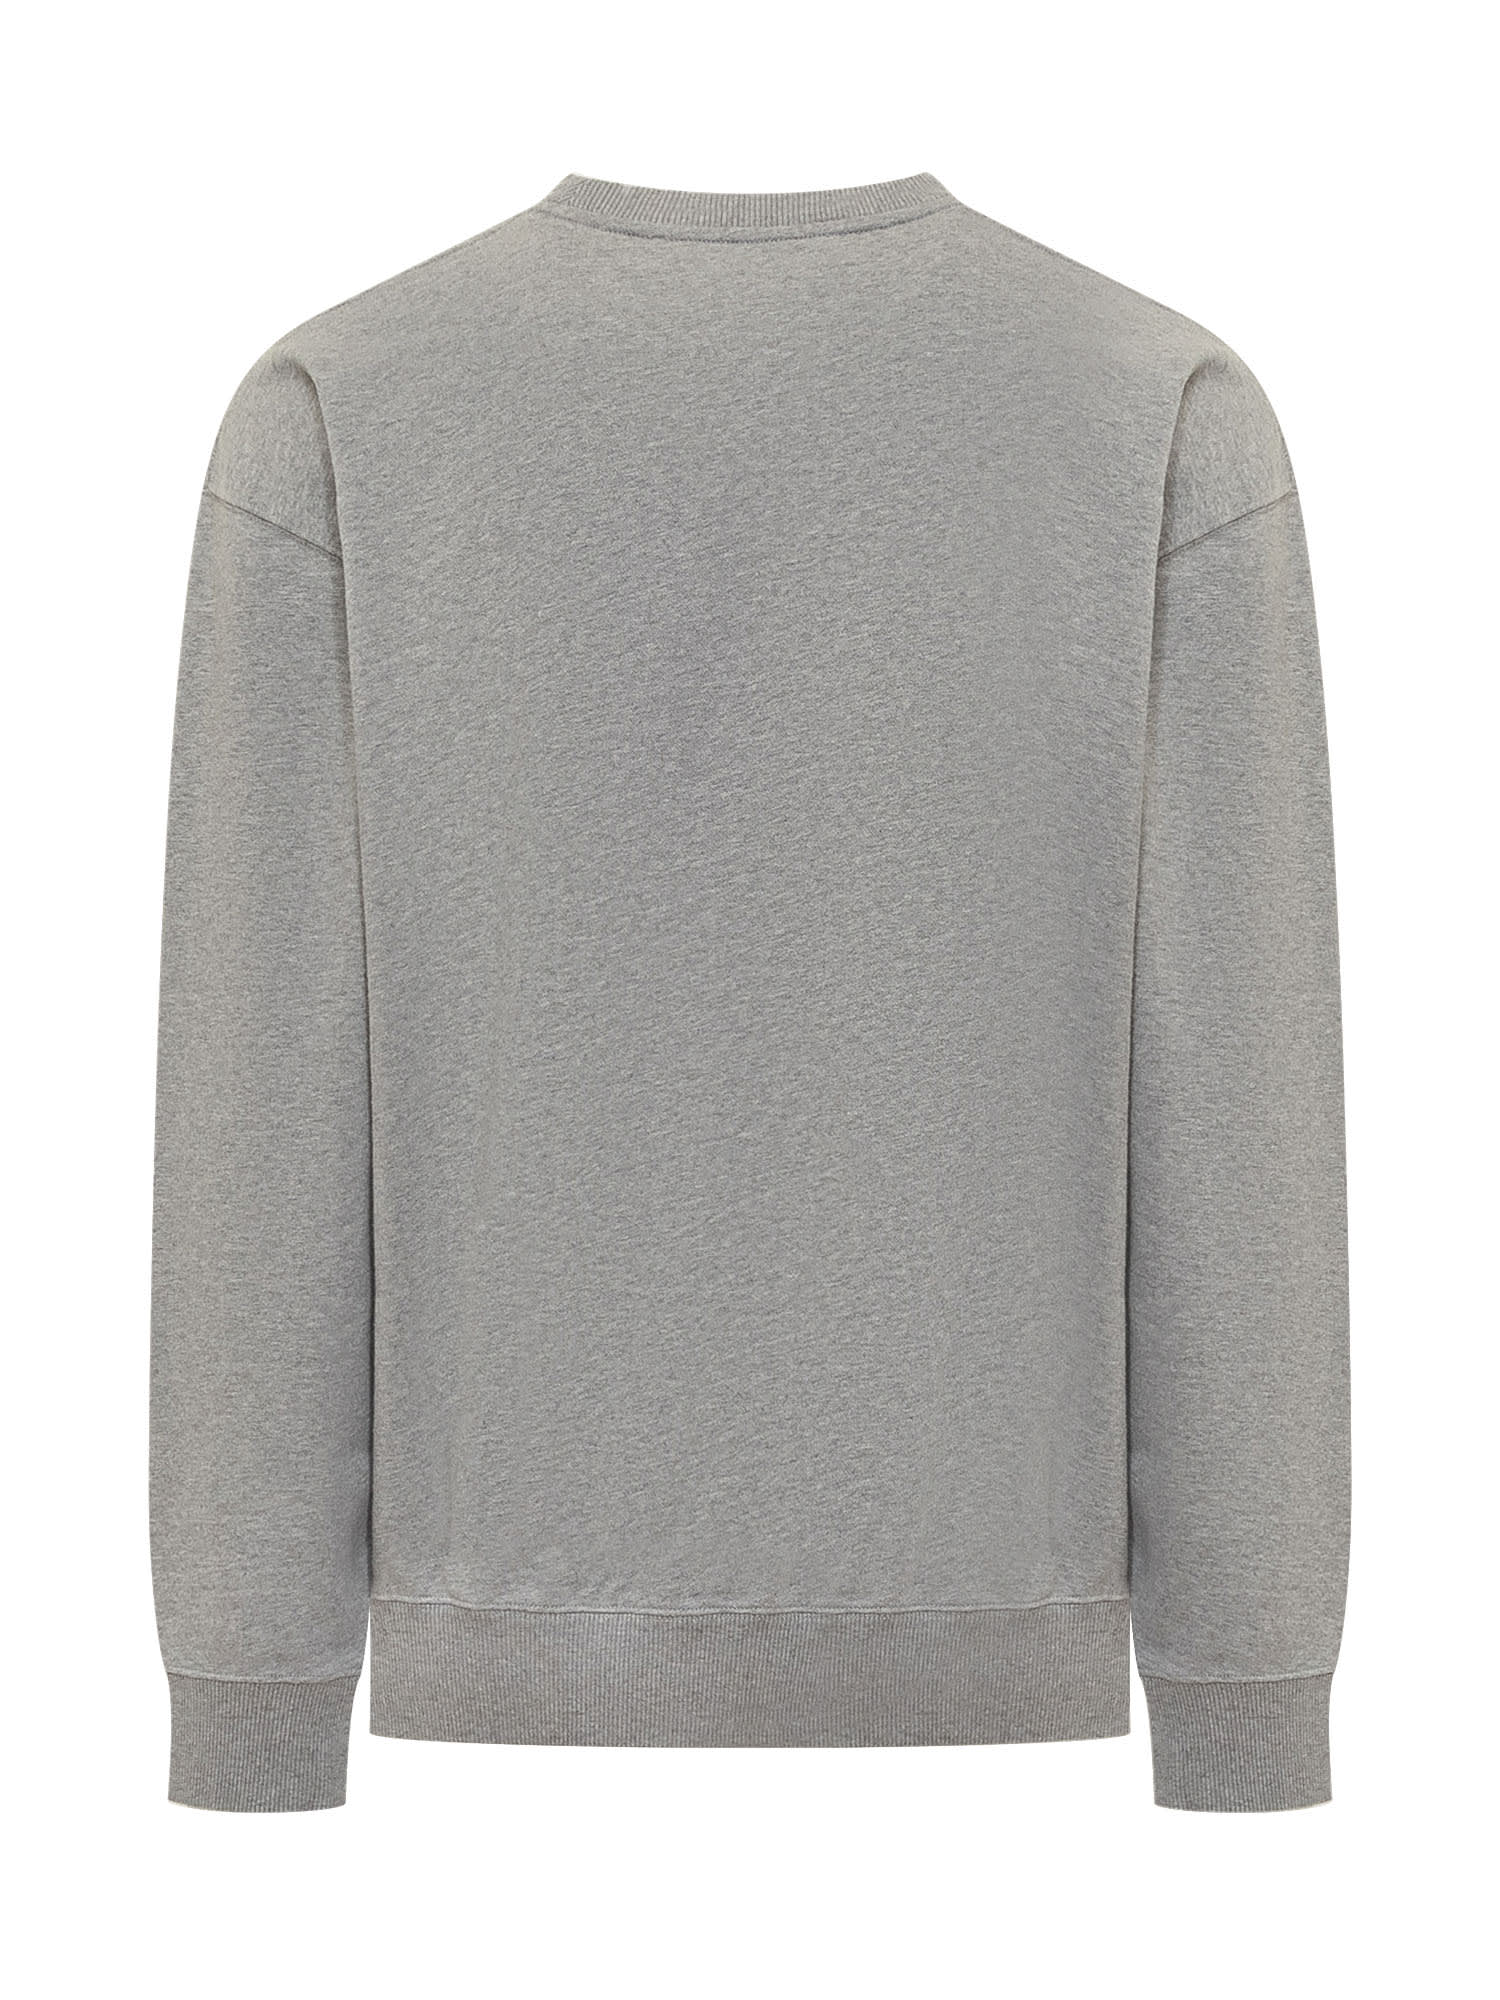 Shop Jw Anderson Jw Puffin Sweatshirt In Mid Grey Melange